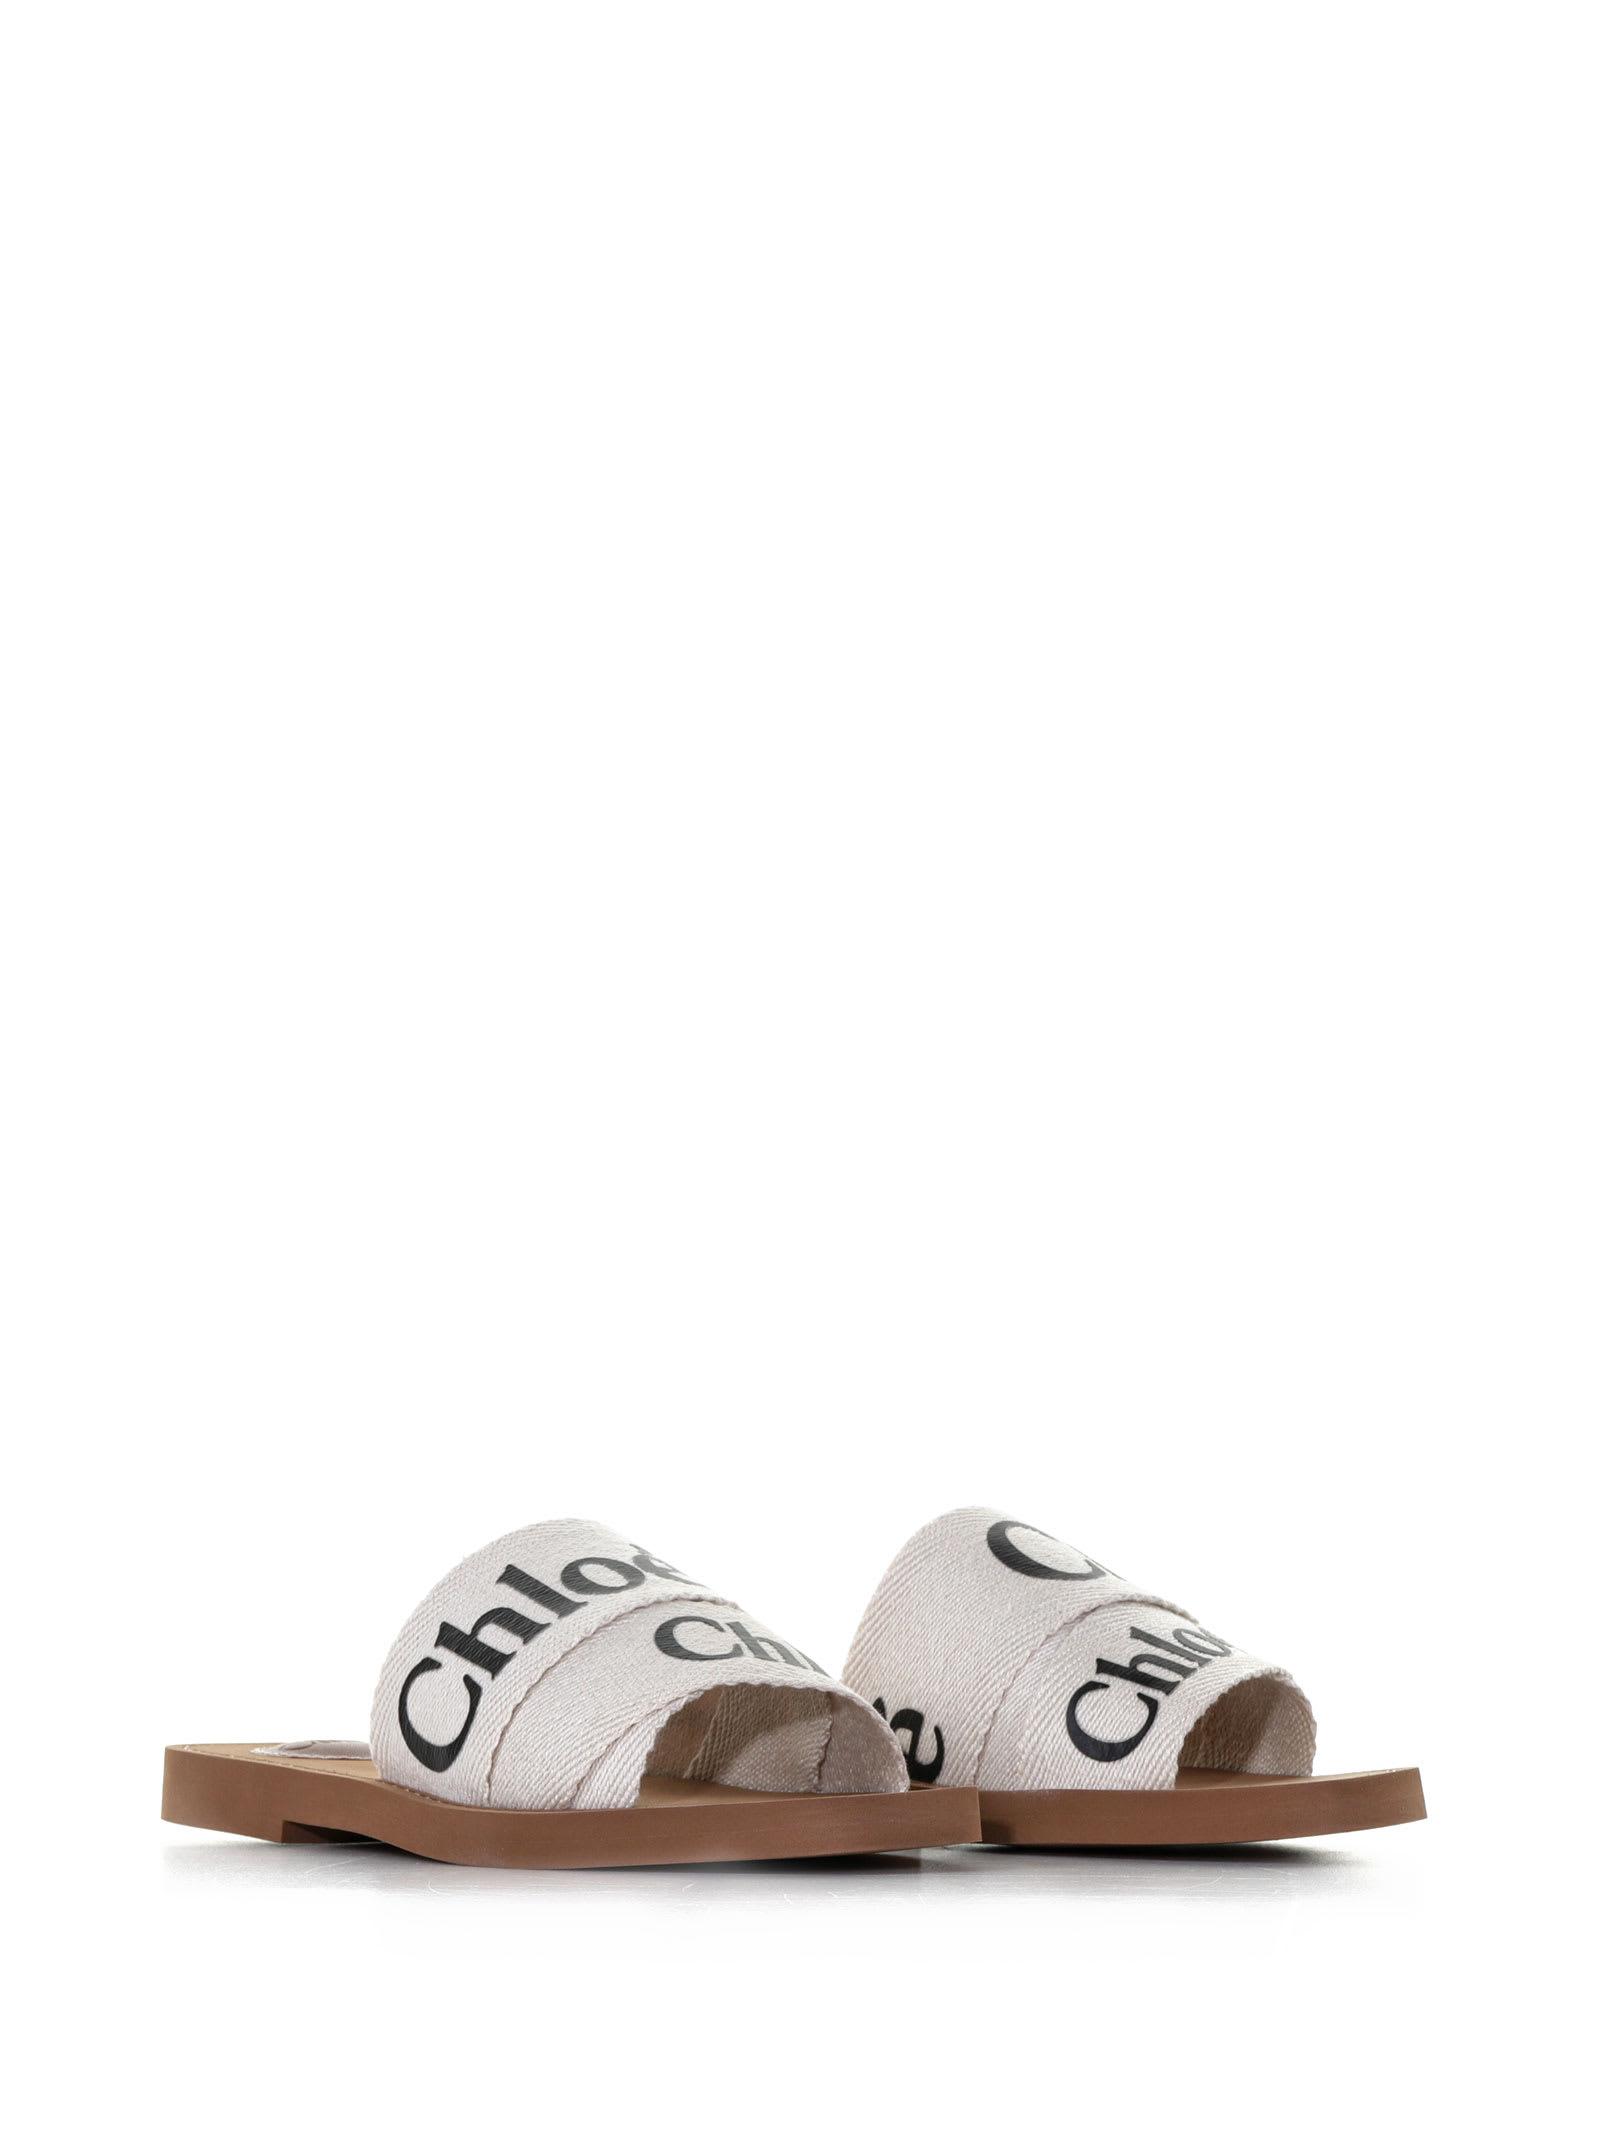 Chloé Woody Slide Sandal In Canvas in White | Lyst